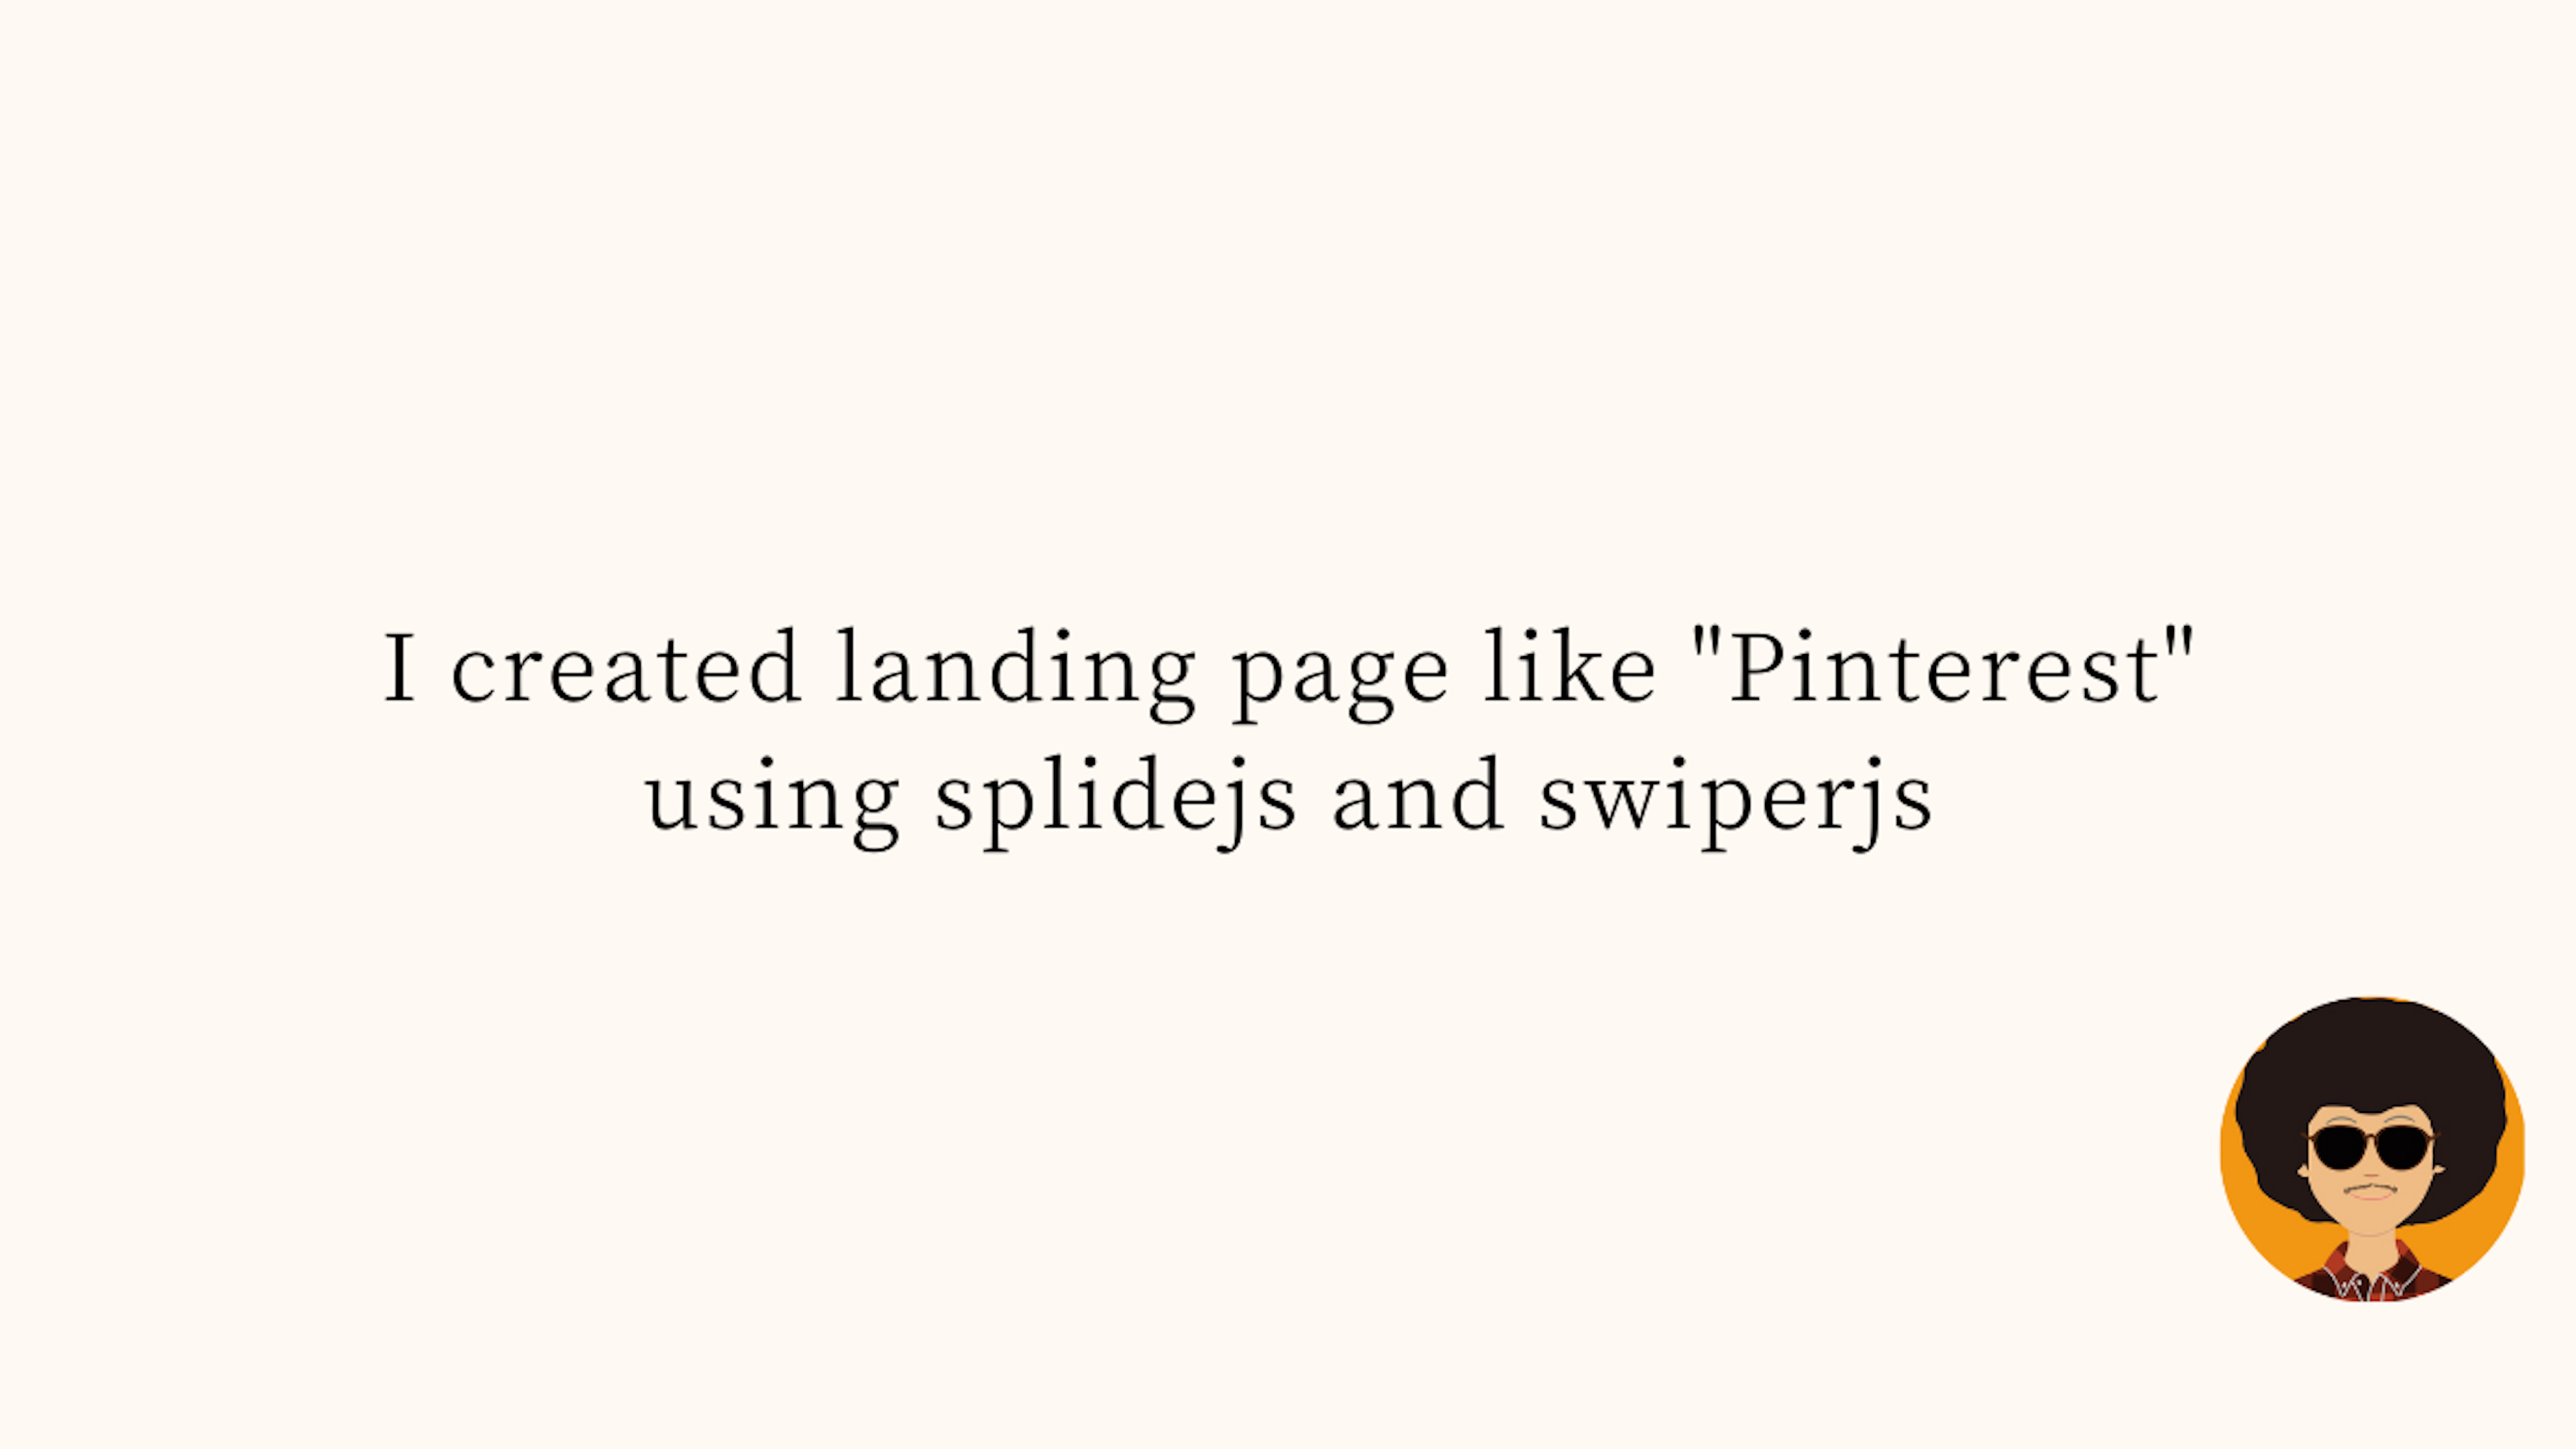 I created landing page like "Pinterest" using splidejs and swiperjs